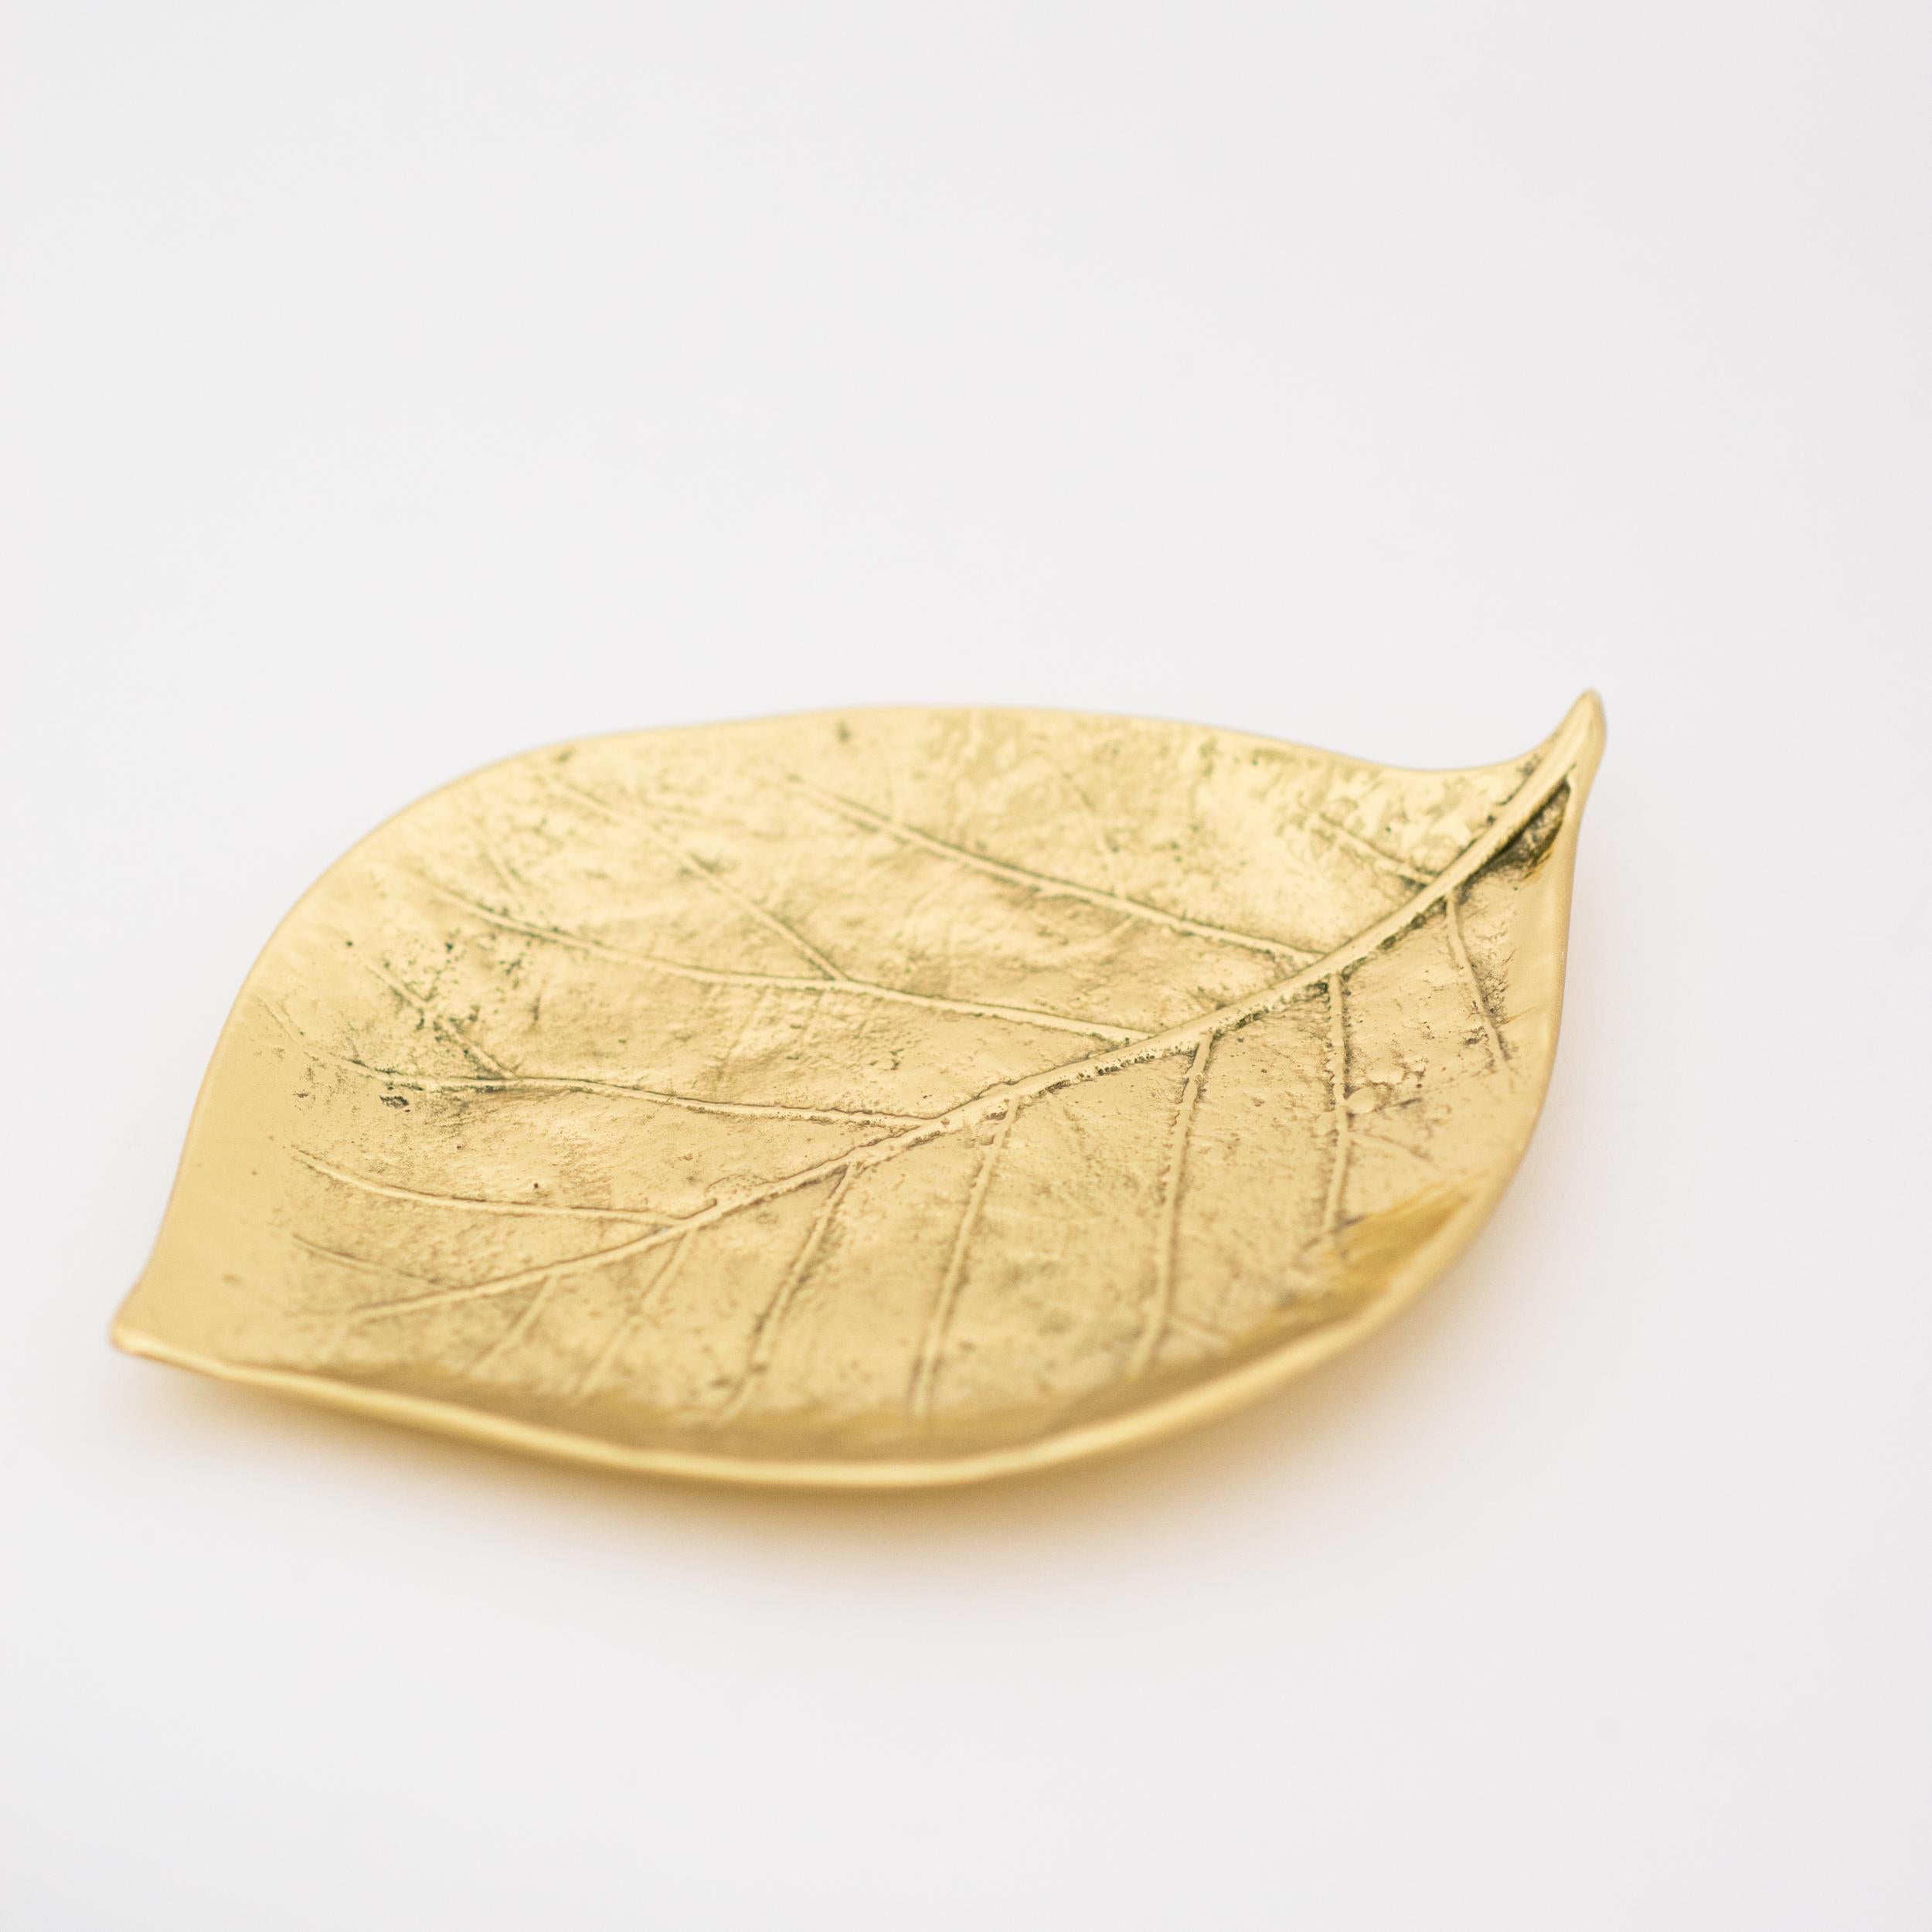 Organic Modern Decorative Handmade Cast Brass Leaf Vide Poche Candleholder, Medium For Sale